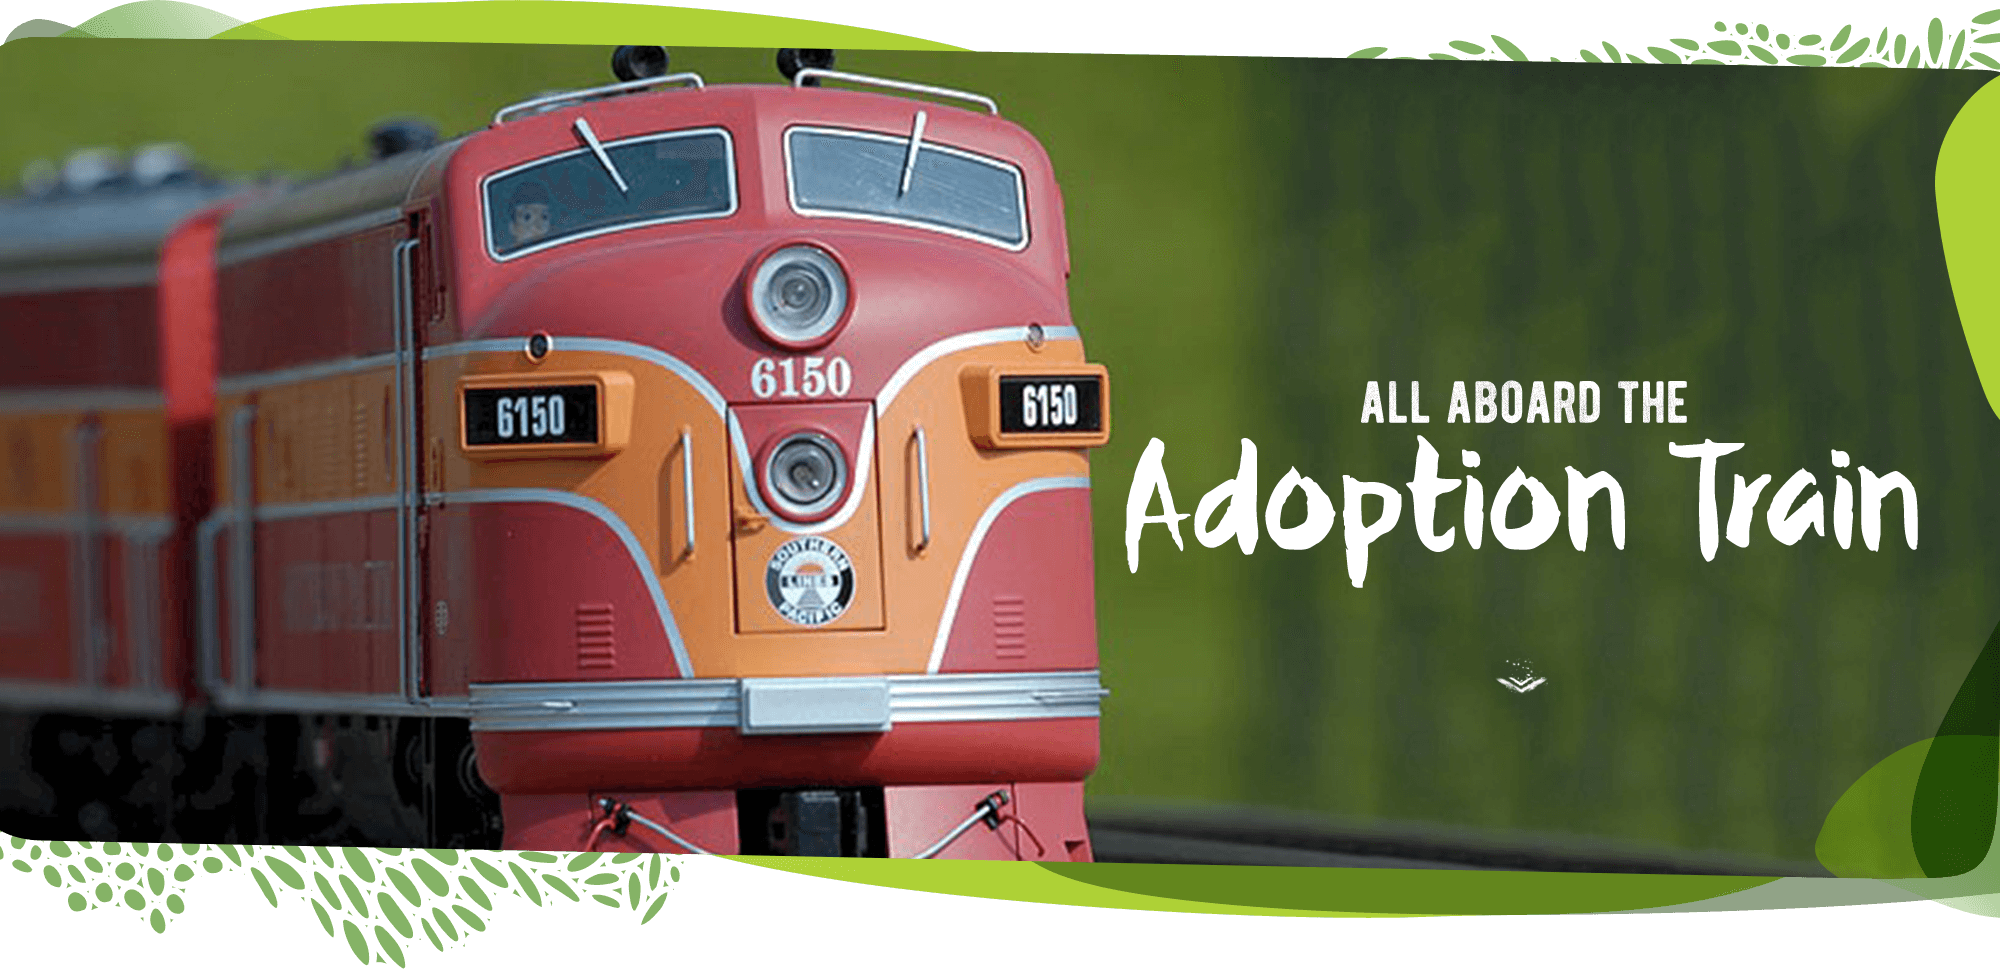 All Aboard the Adoption Train